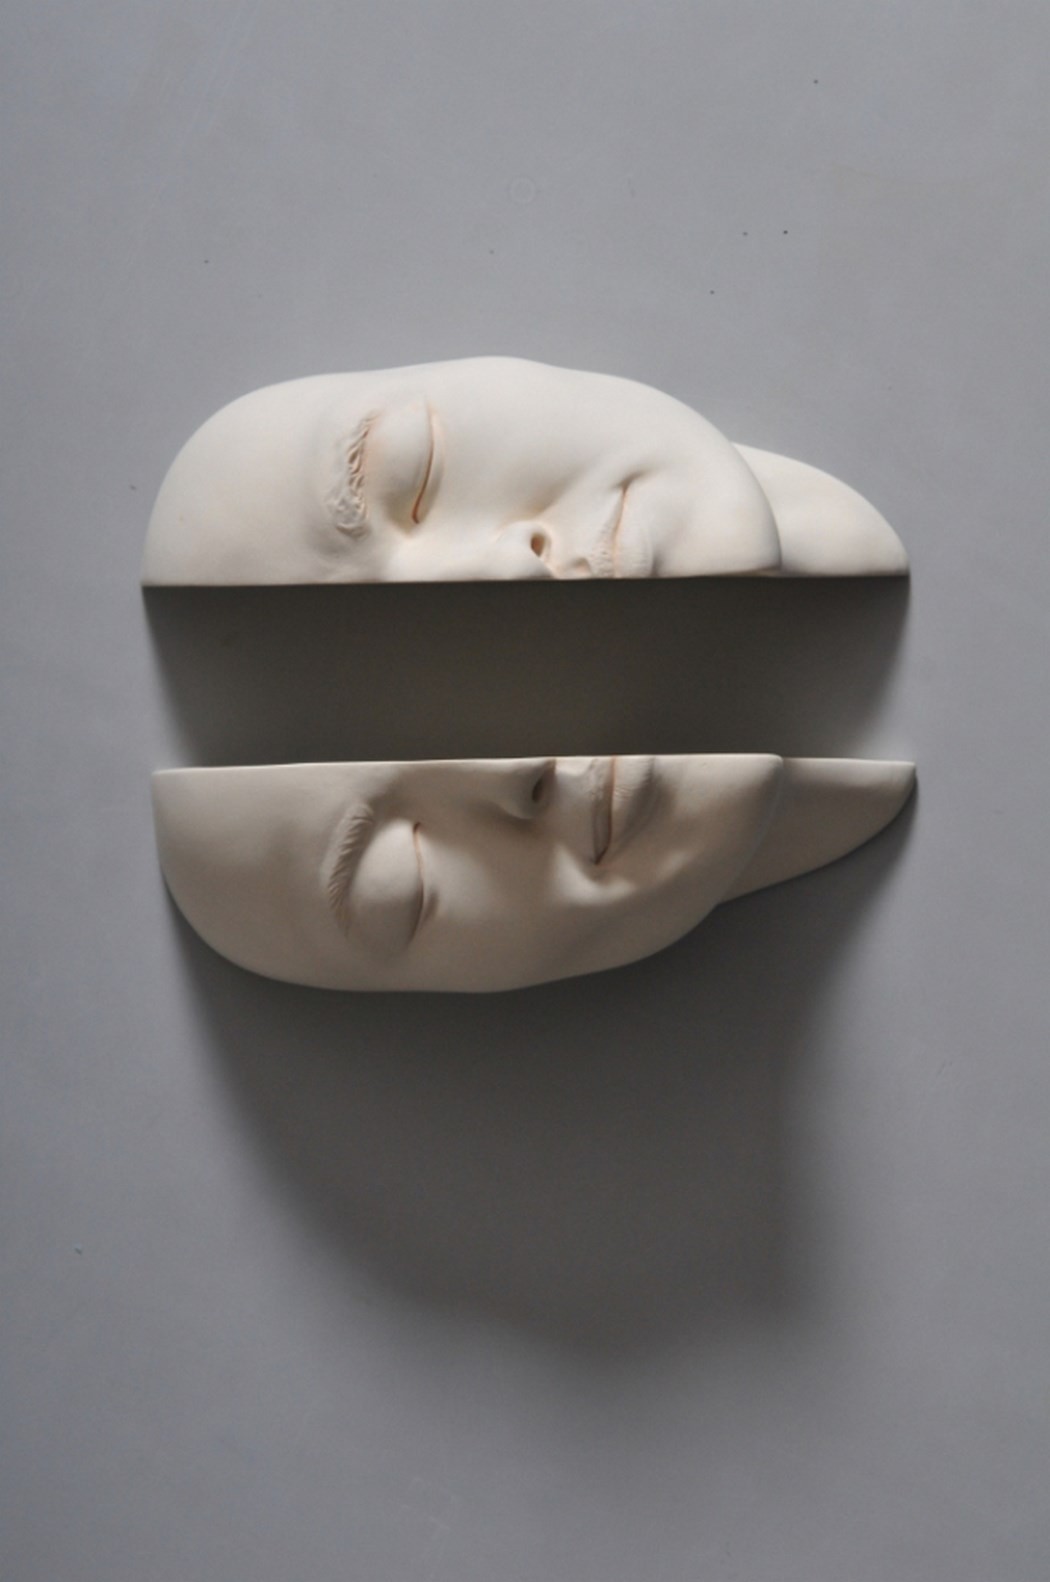 20 ceramic sculpture byjohnson tsang